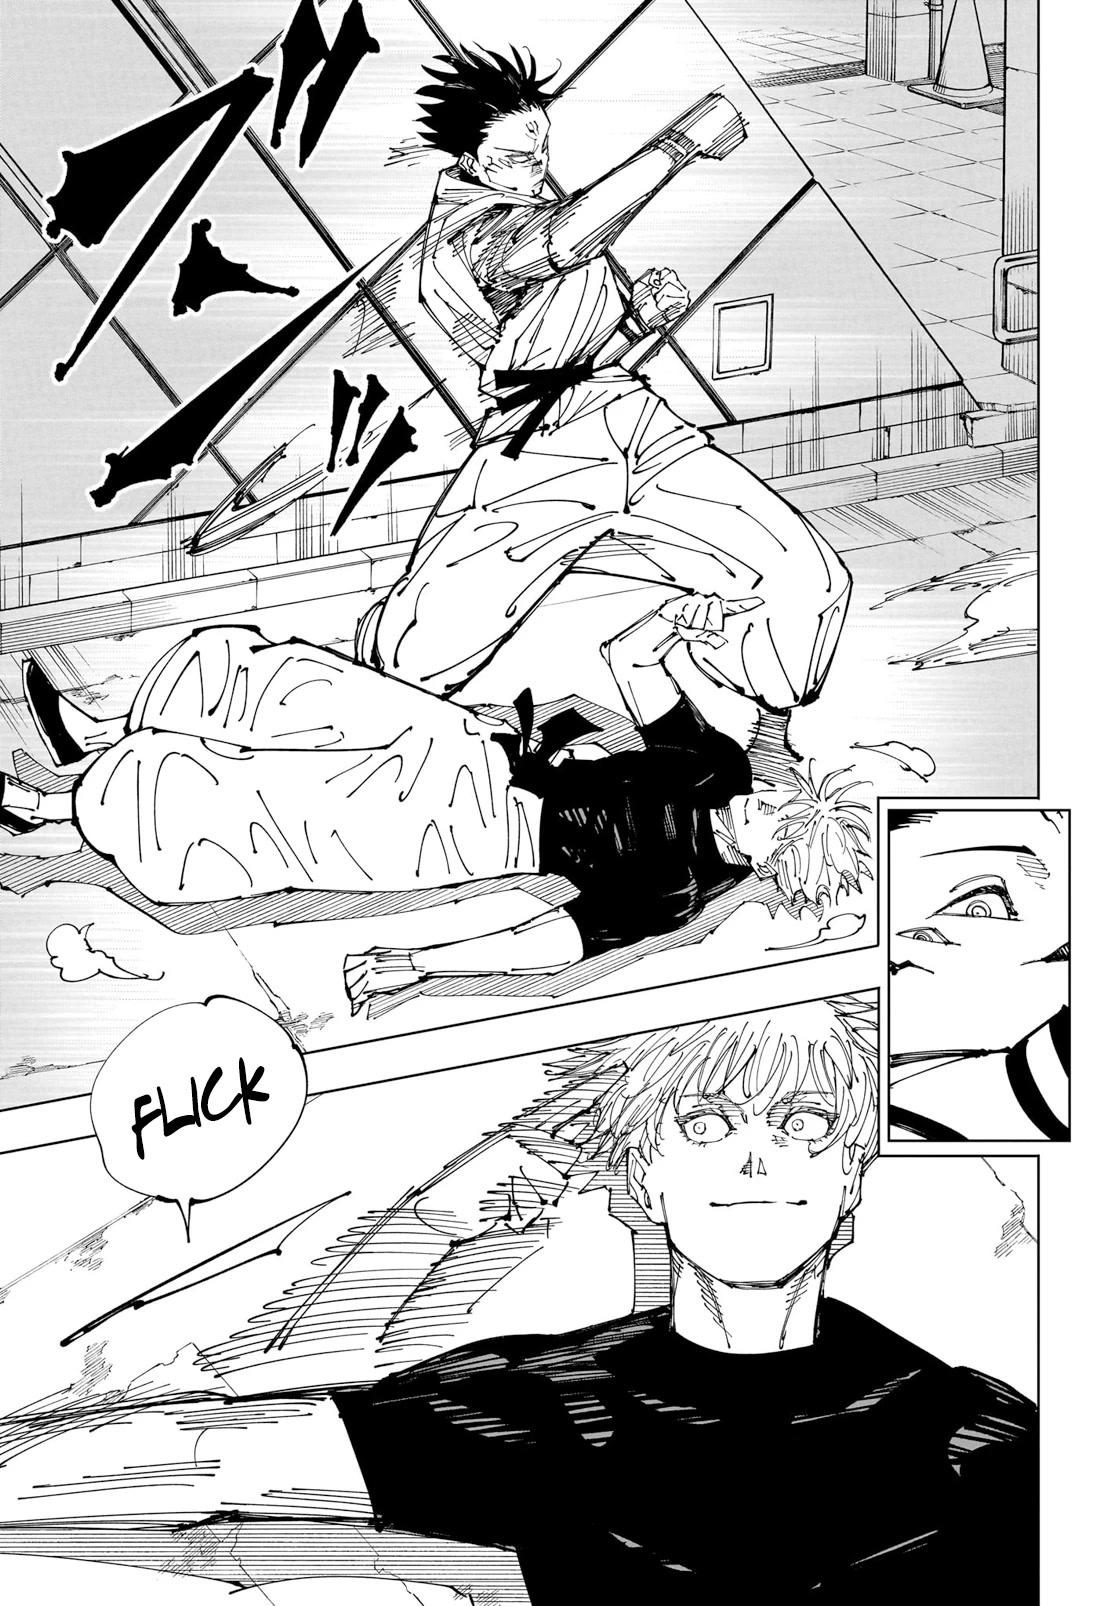 Jujutsu Kaisen Chapter 224: The Decisive Battle In The Uninhabited, Demon-Infested Shinjuku ② page 6 - Mangakakalot